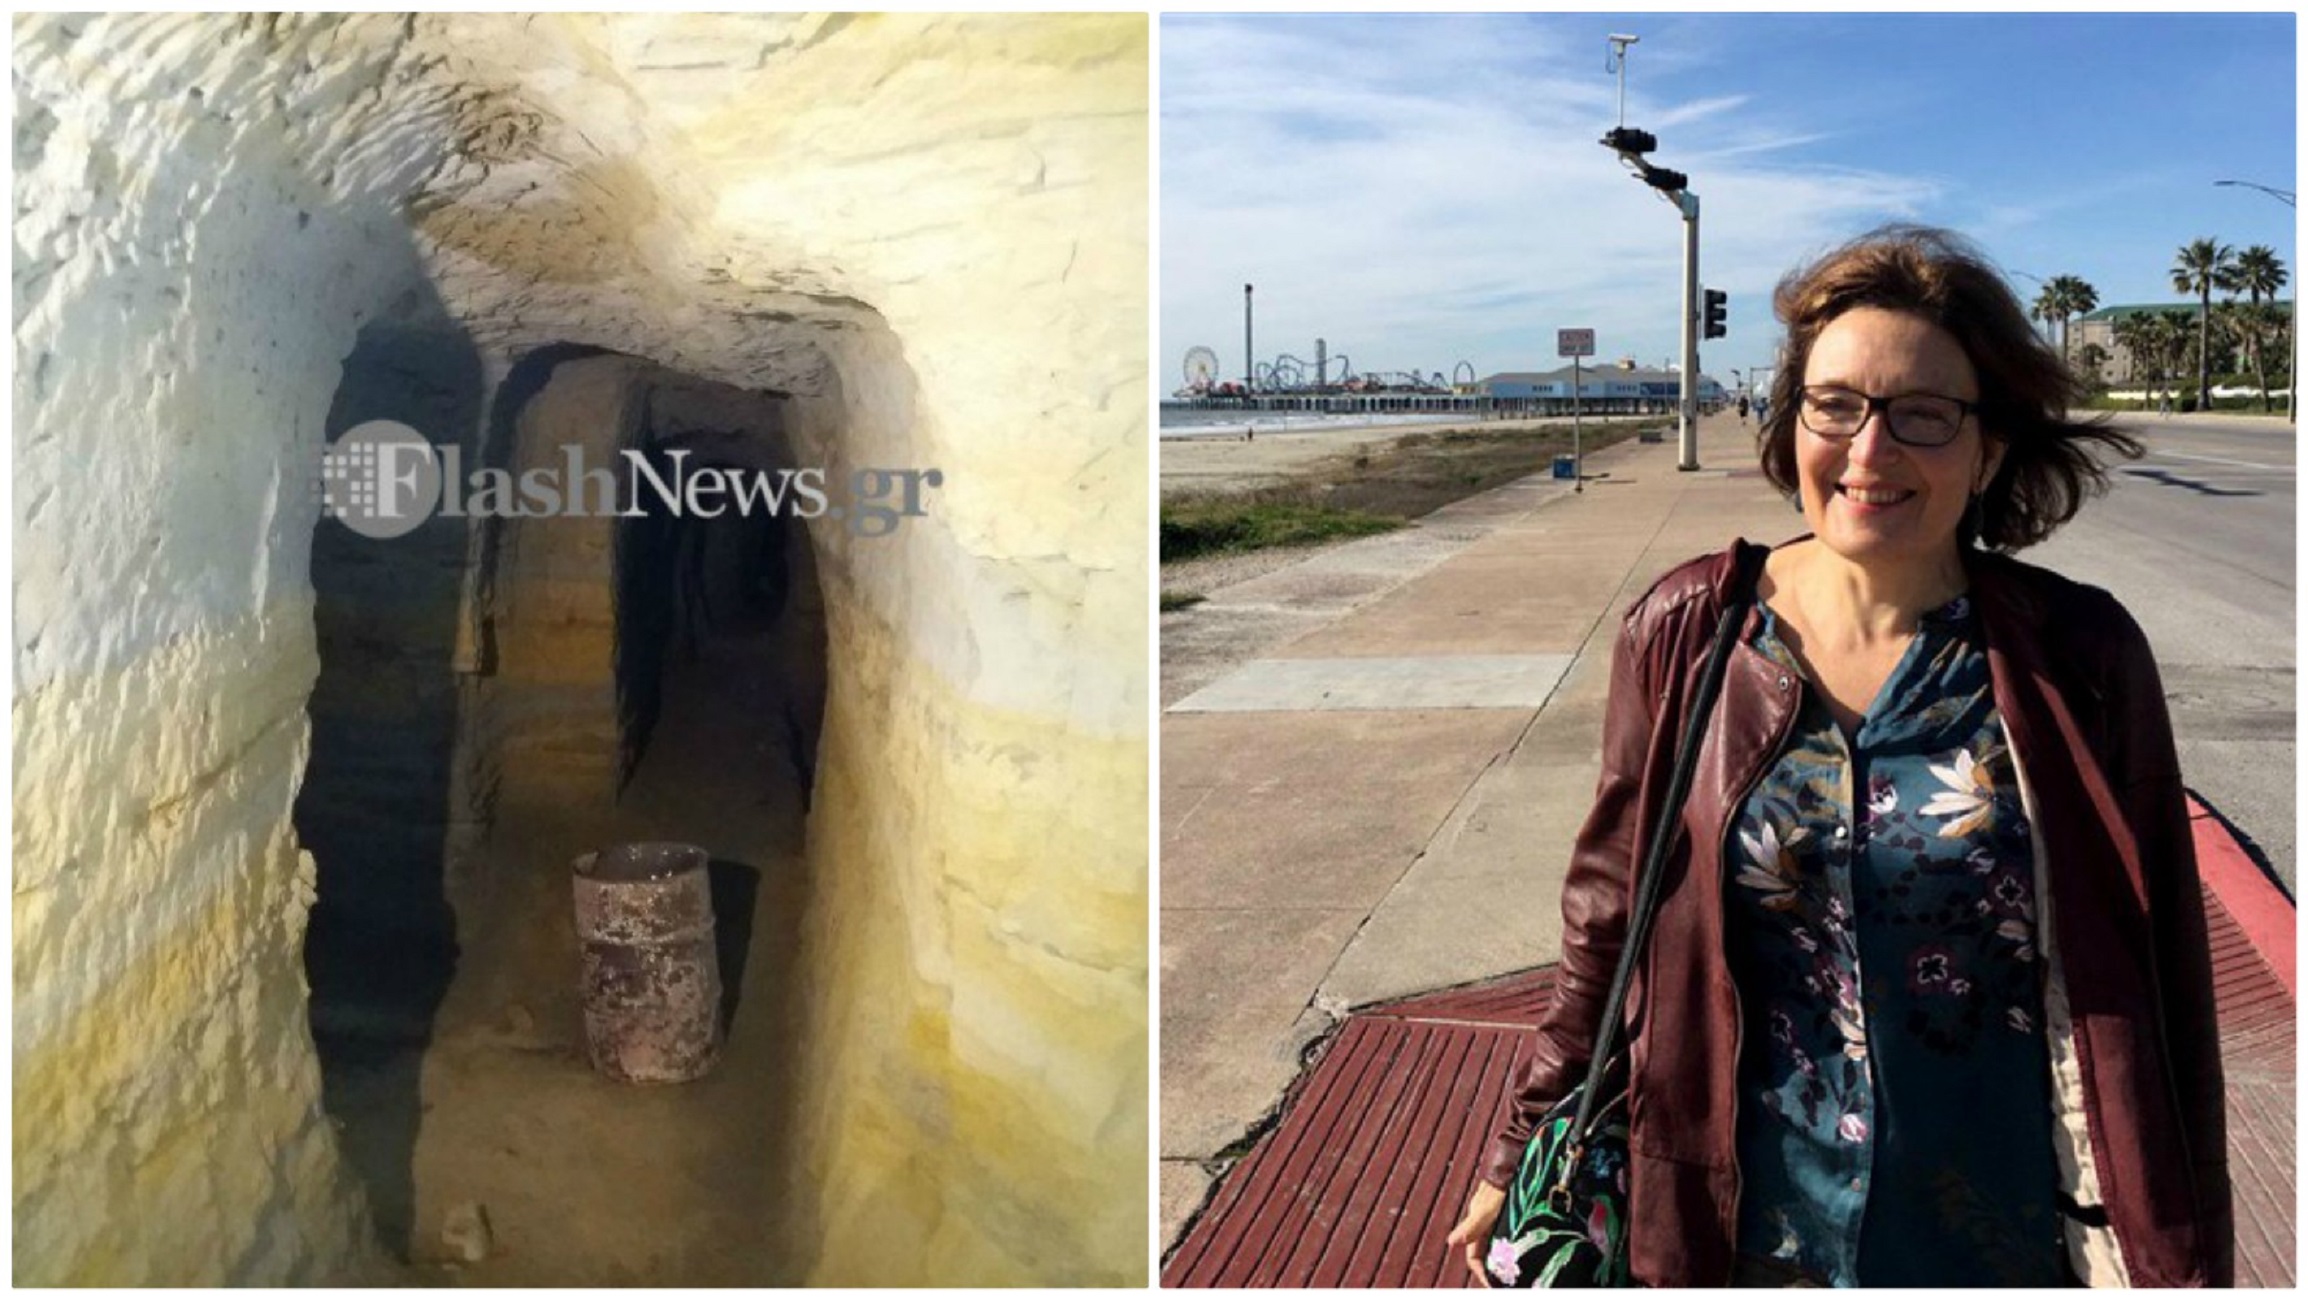 Suzanne Eaton: Μέσα στο τούνελ που βρέθηκε νεκρή η Αμερικανίδα βιολόγος! video, pics